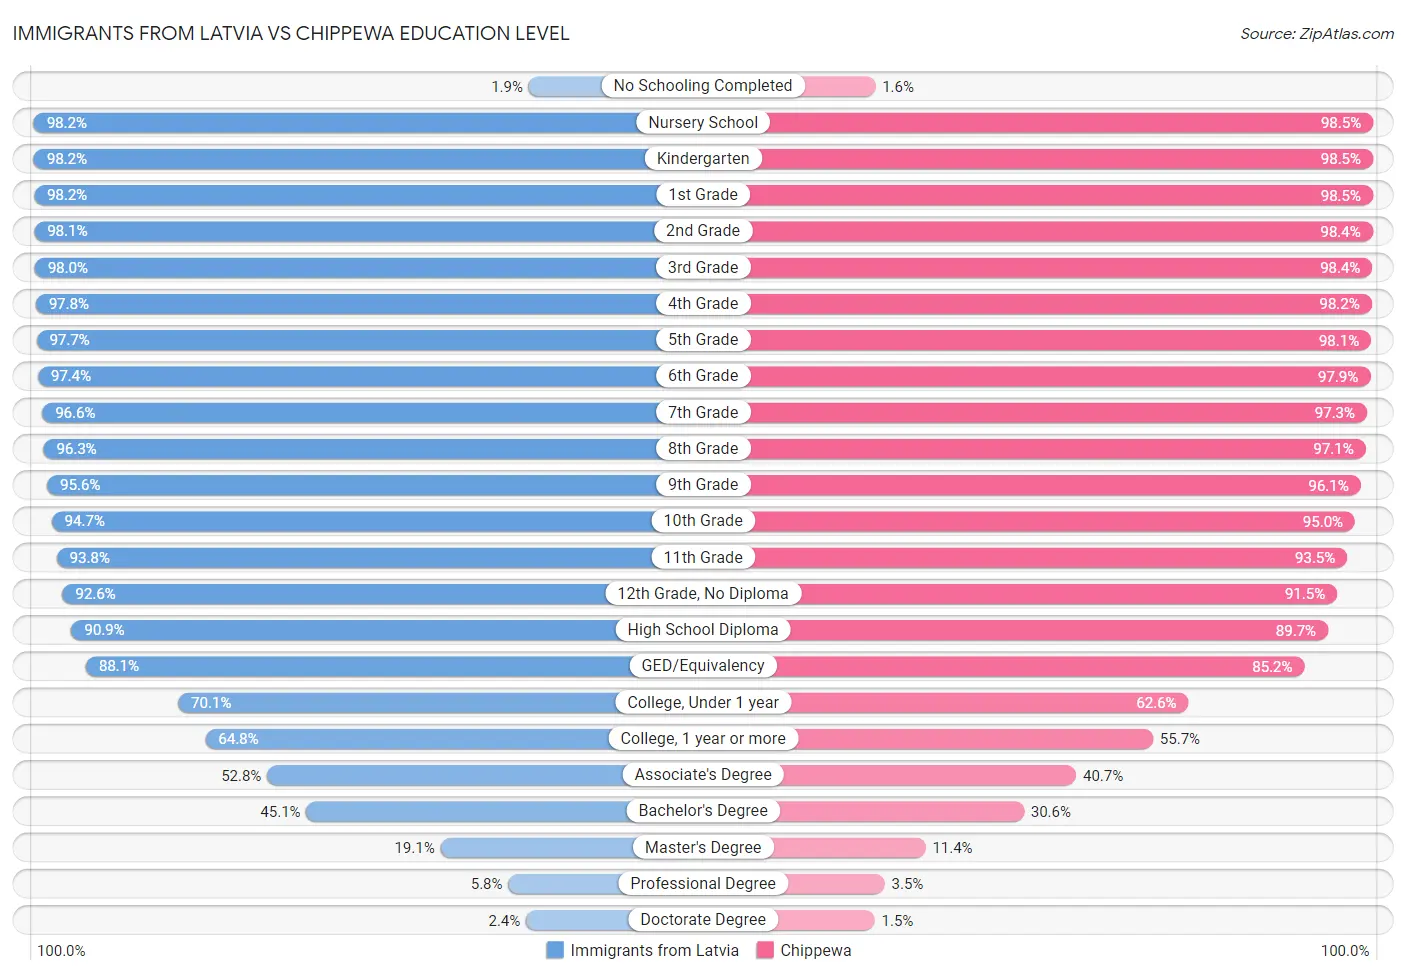 Immigrants from Latvia vs Chippewa Education Level